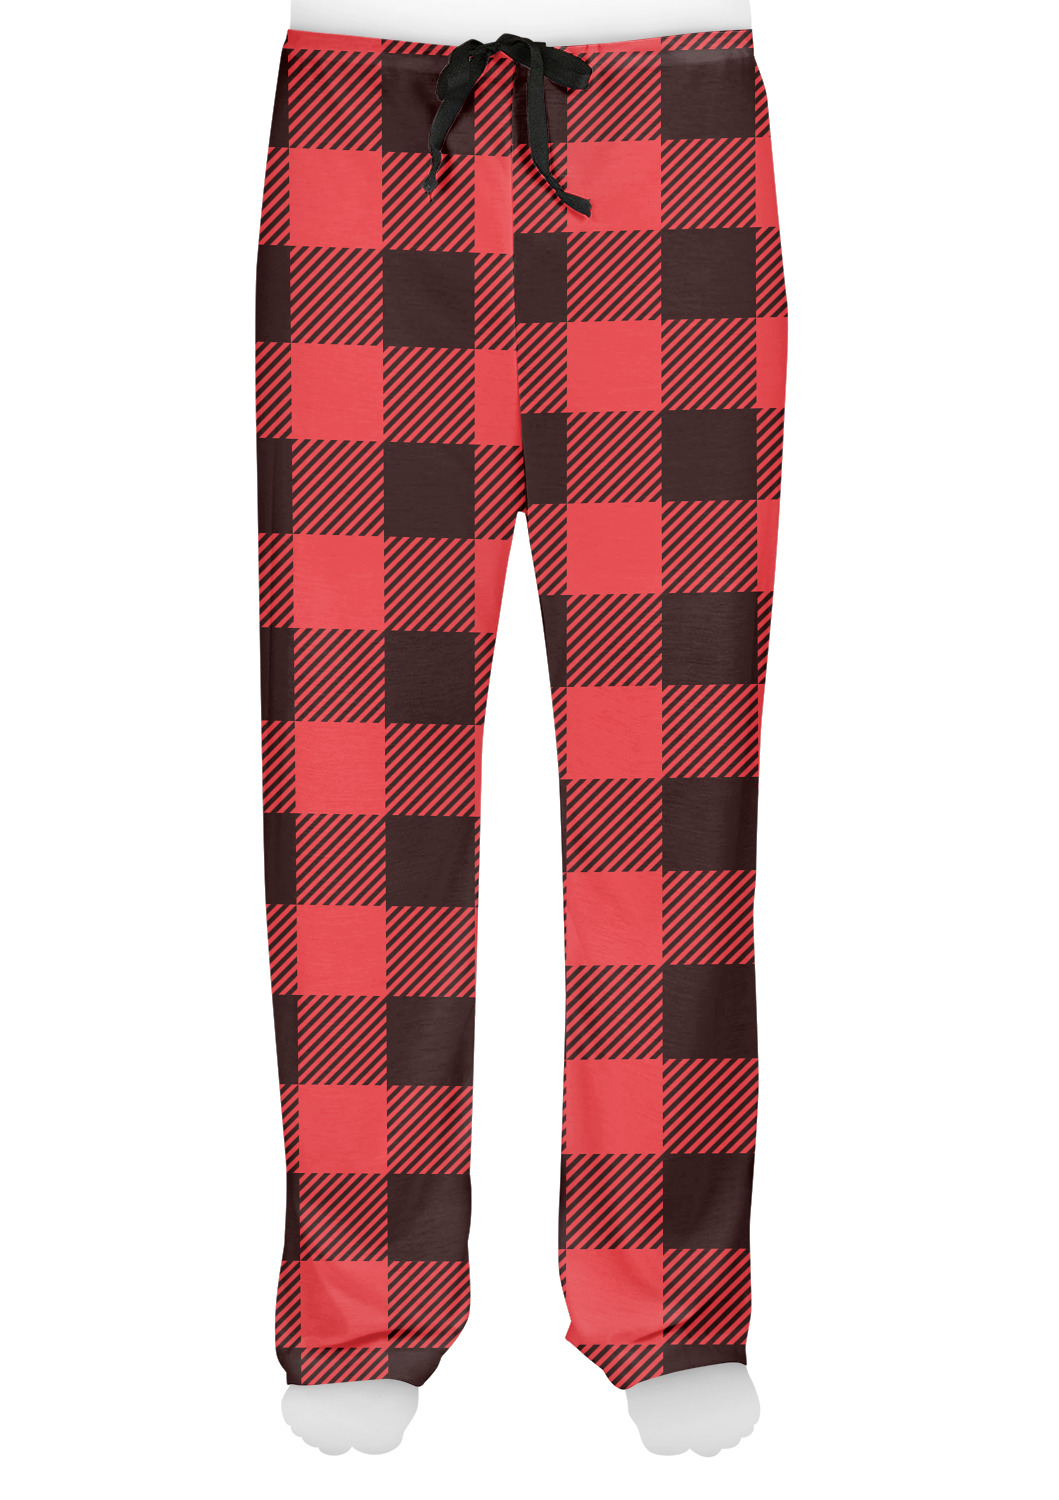 Lumberjack Plaid Design Custom Mens Pajama Pants